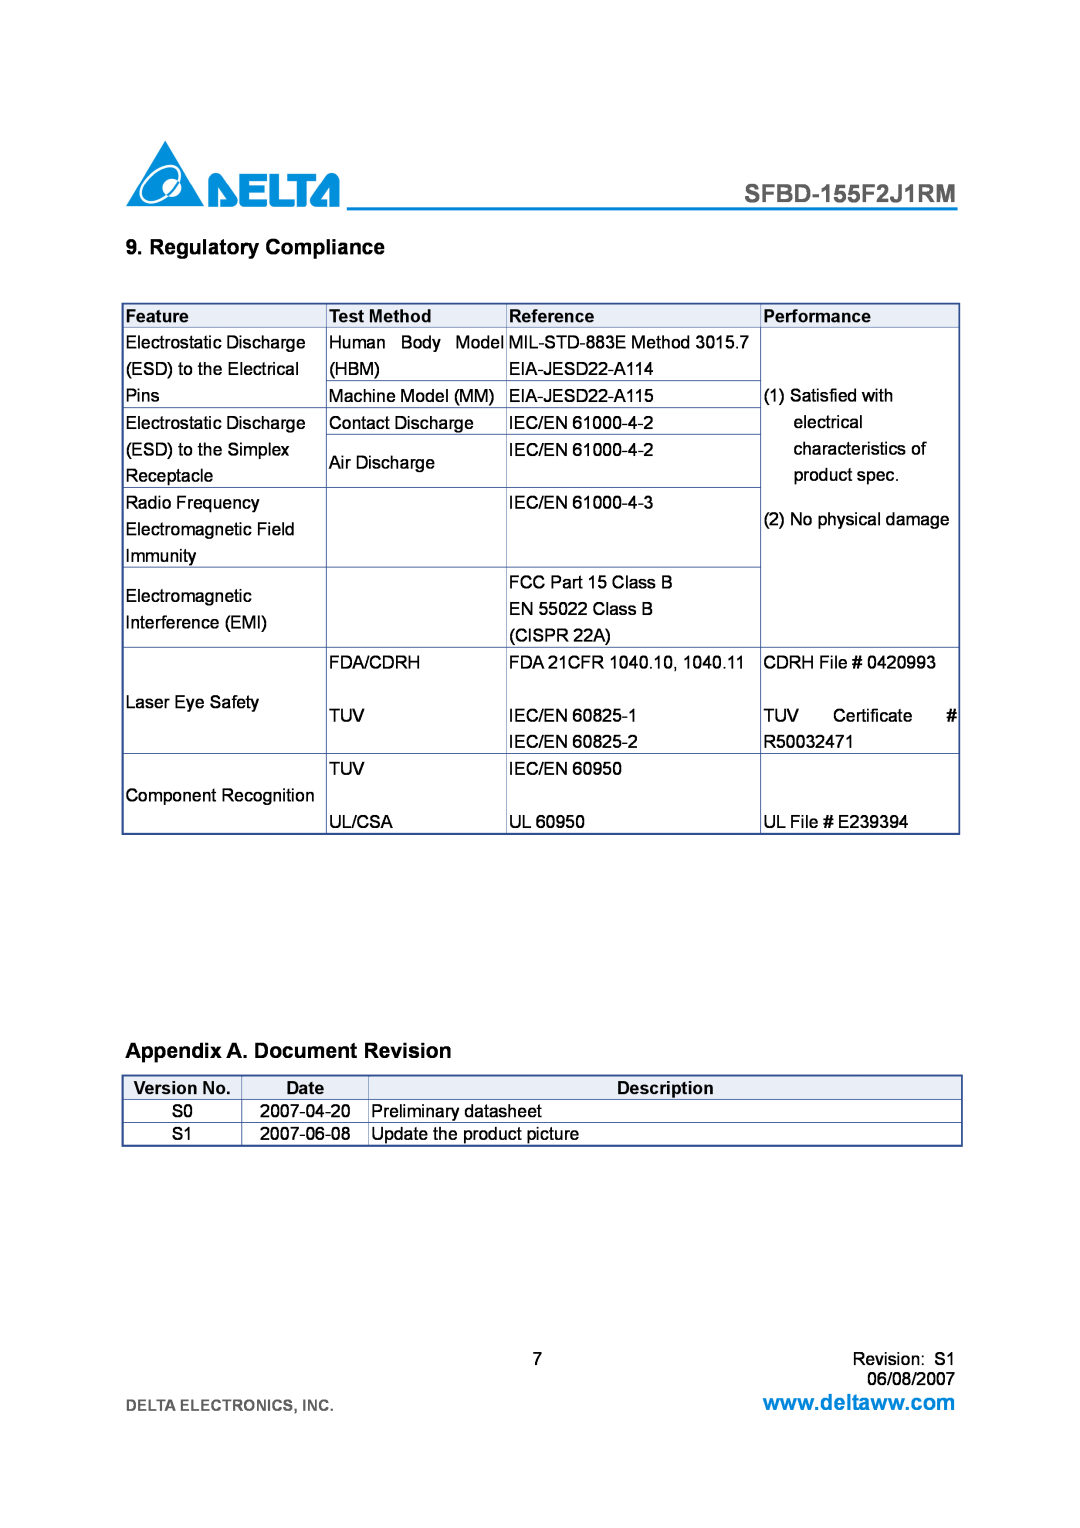 Delta Electronics SFBD-155F2J1RM Regulatory Compliance, Appendix A. Document Revision, Feature, Test Method, Reference 